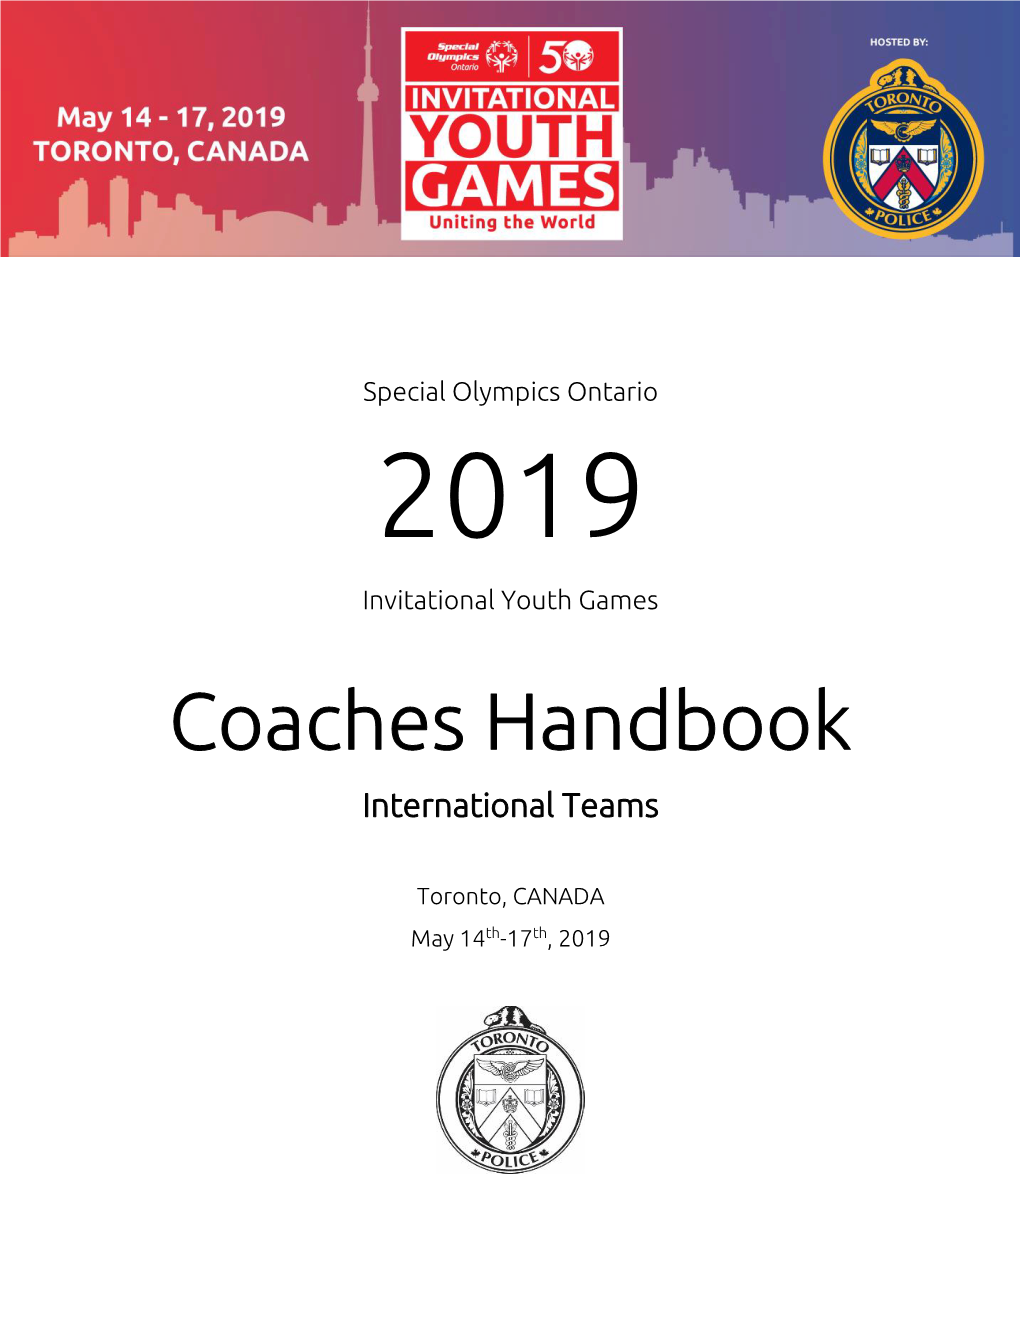 Coaches Handbook International Teams